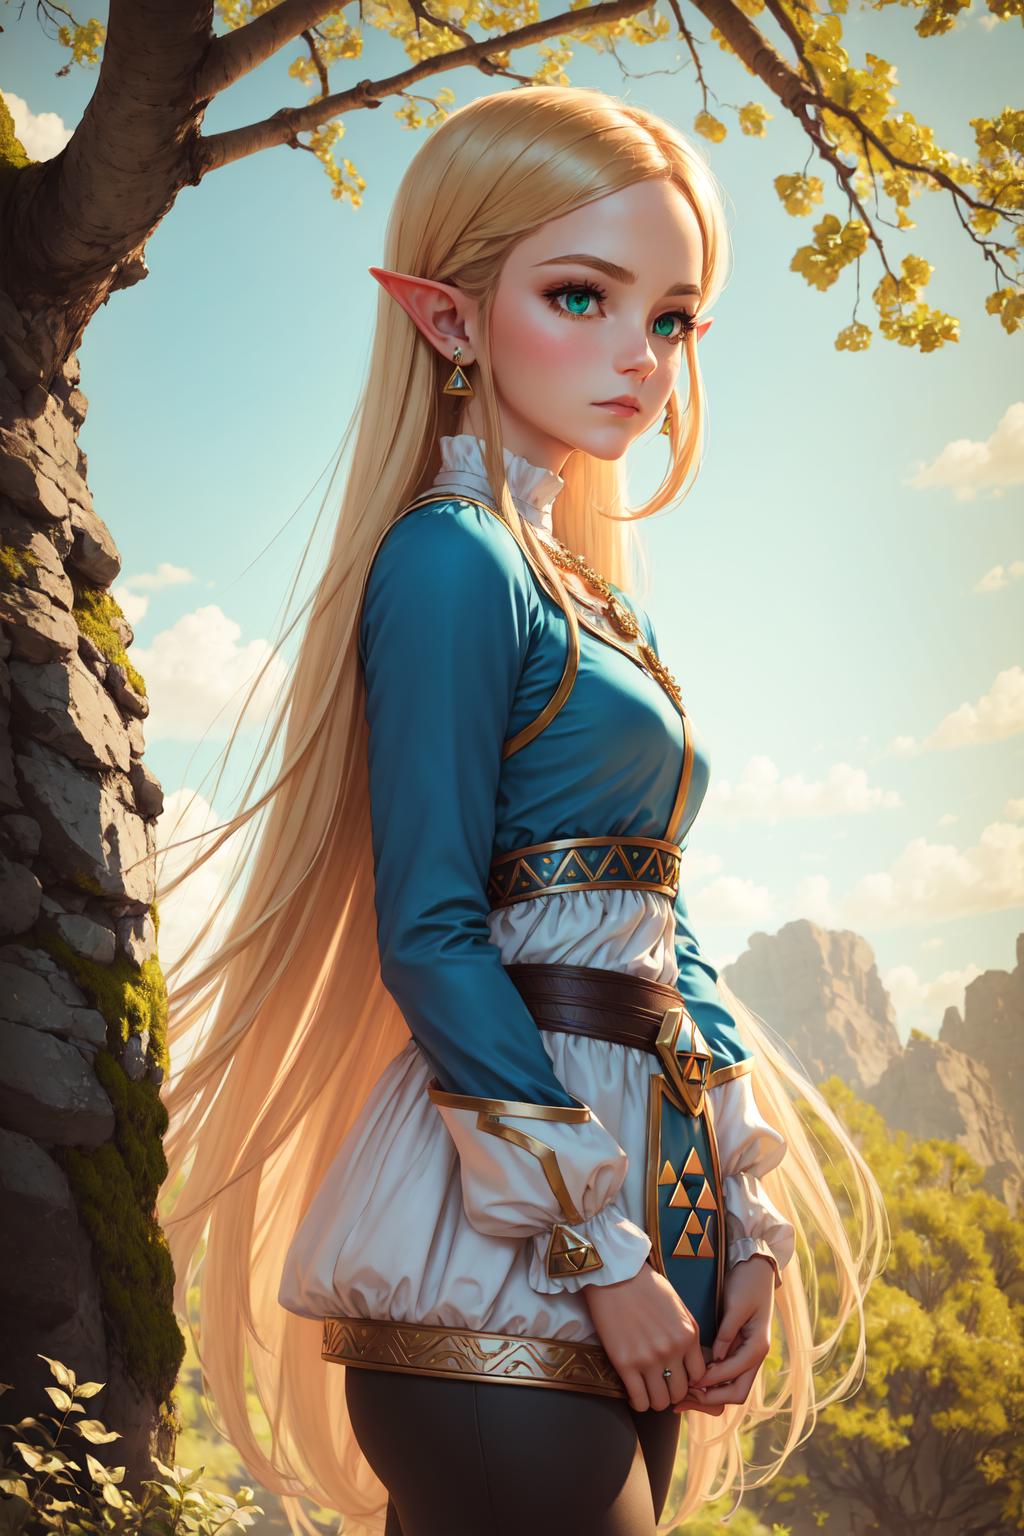 Princess Zelda LoRA image by Gorl